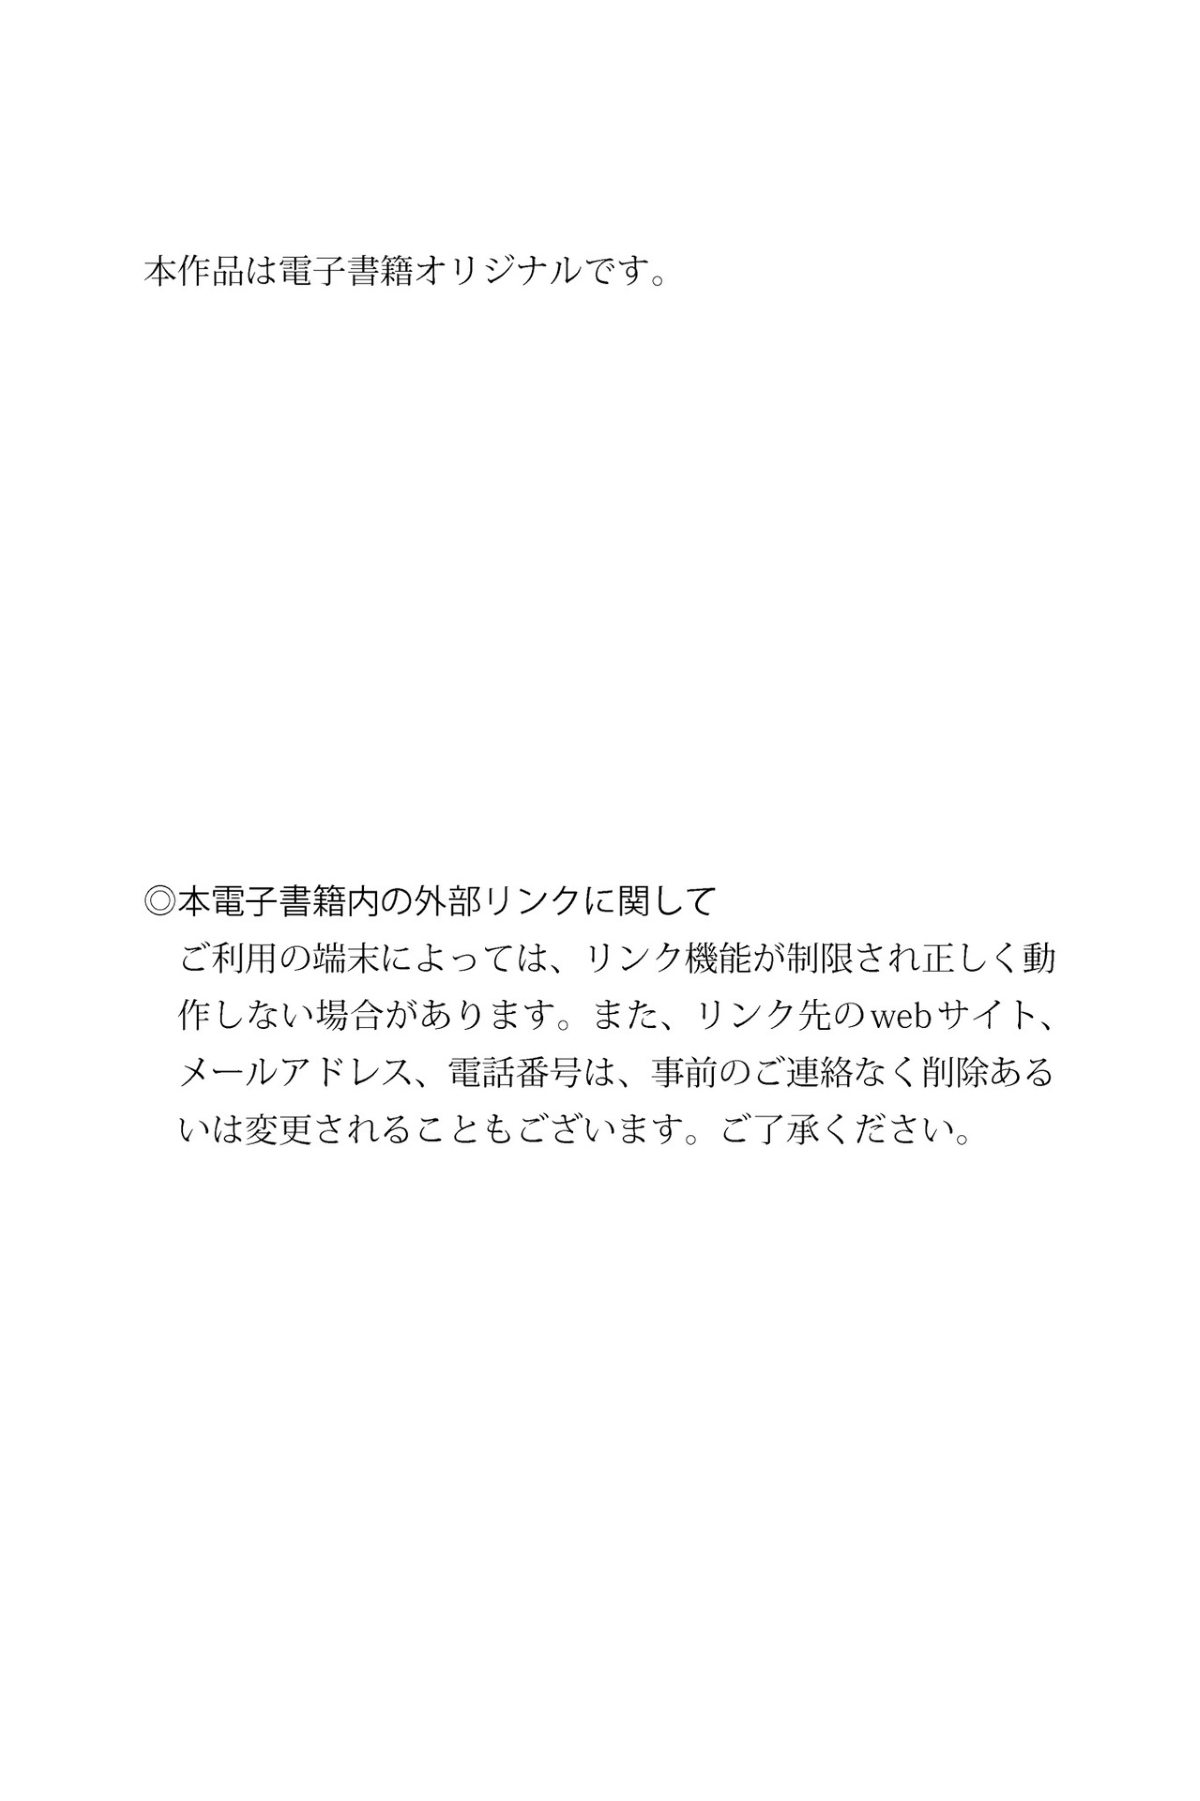 FRIDAY Digital Photobook Tsubasa Hazuki 葉月つばさ Miobiki Vol 1 澪引き Vol 1 2022 07 01 0066 7857432997.jpg